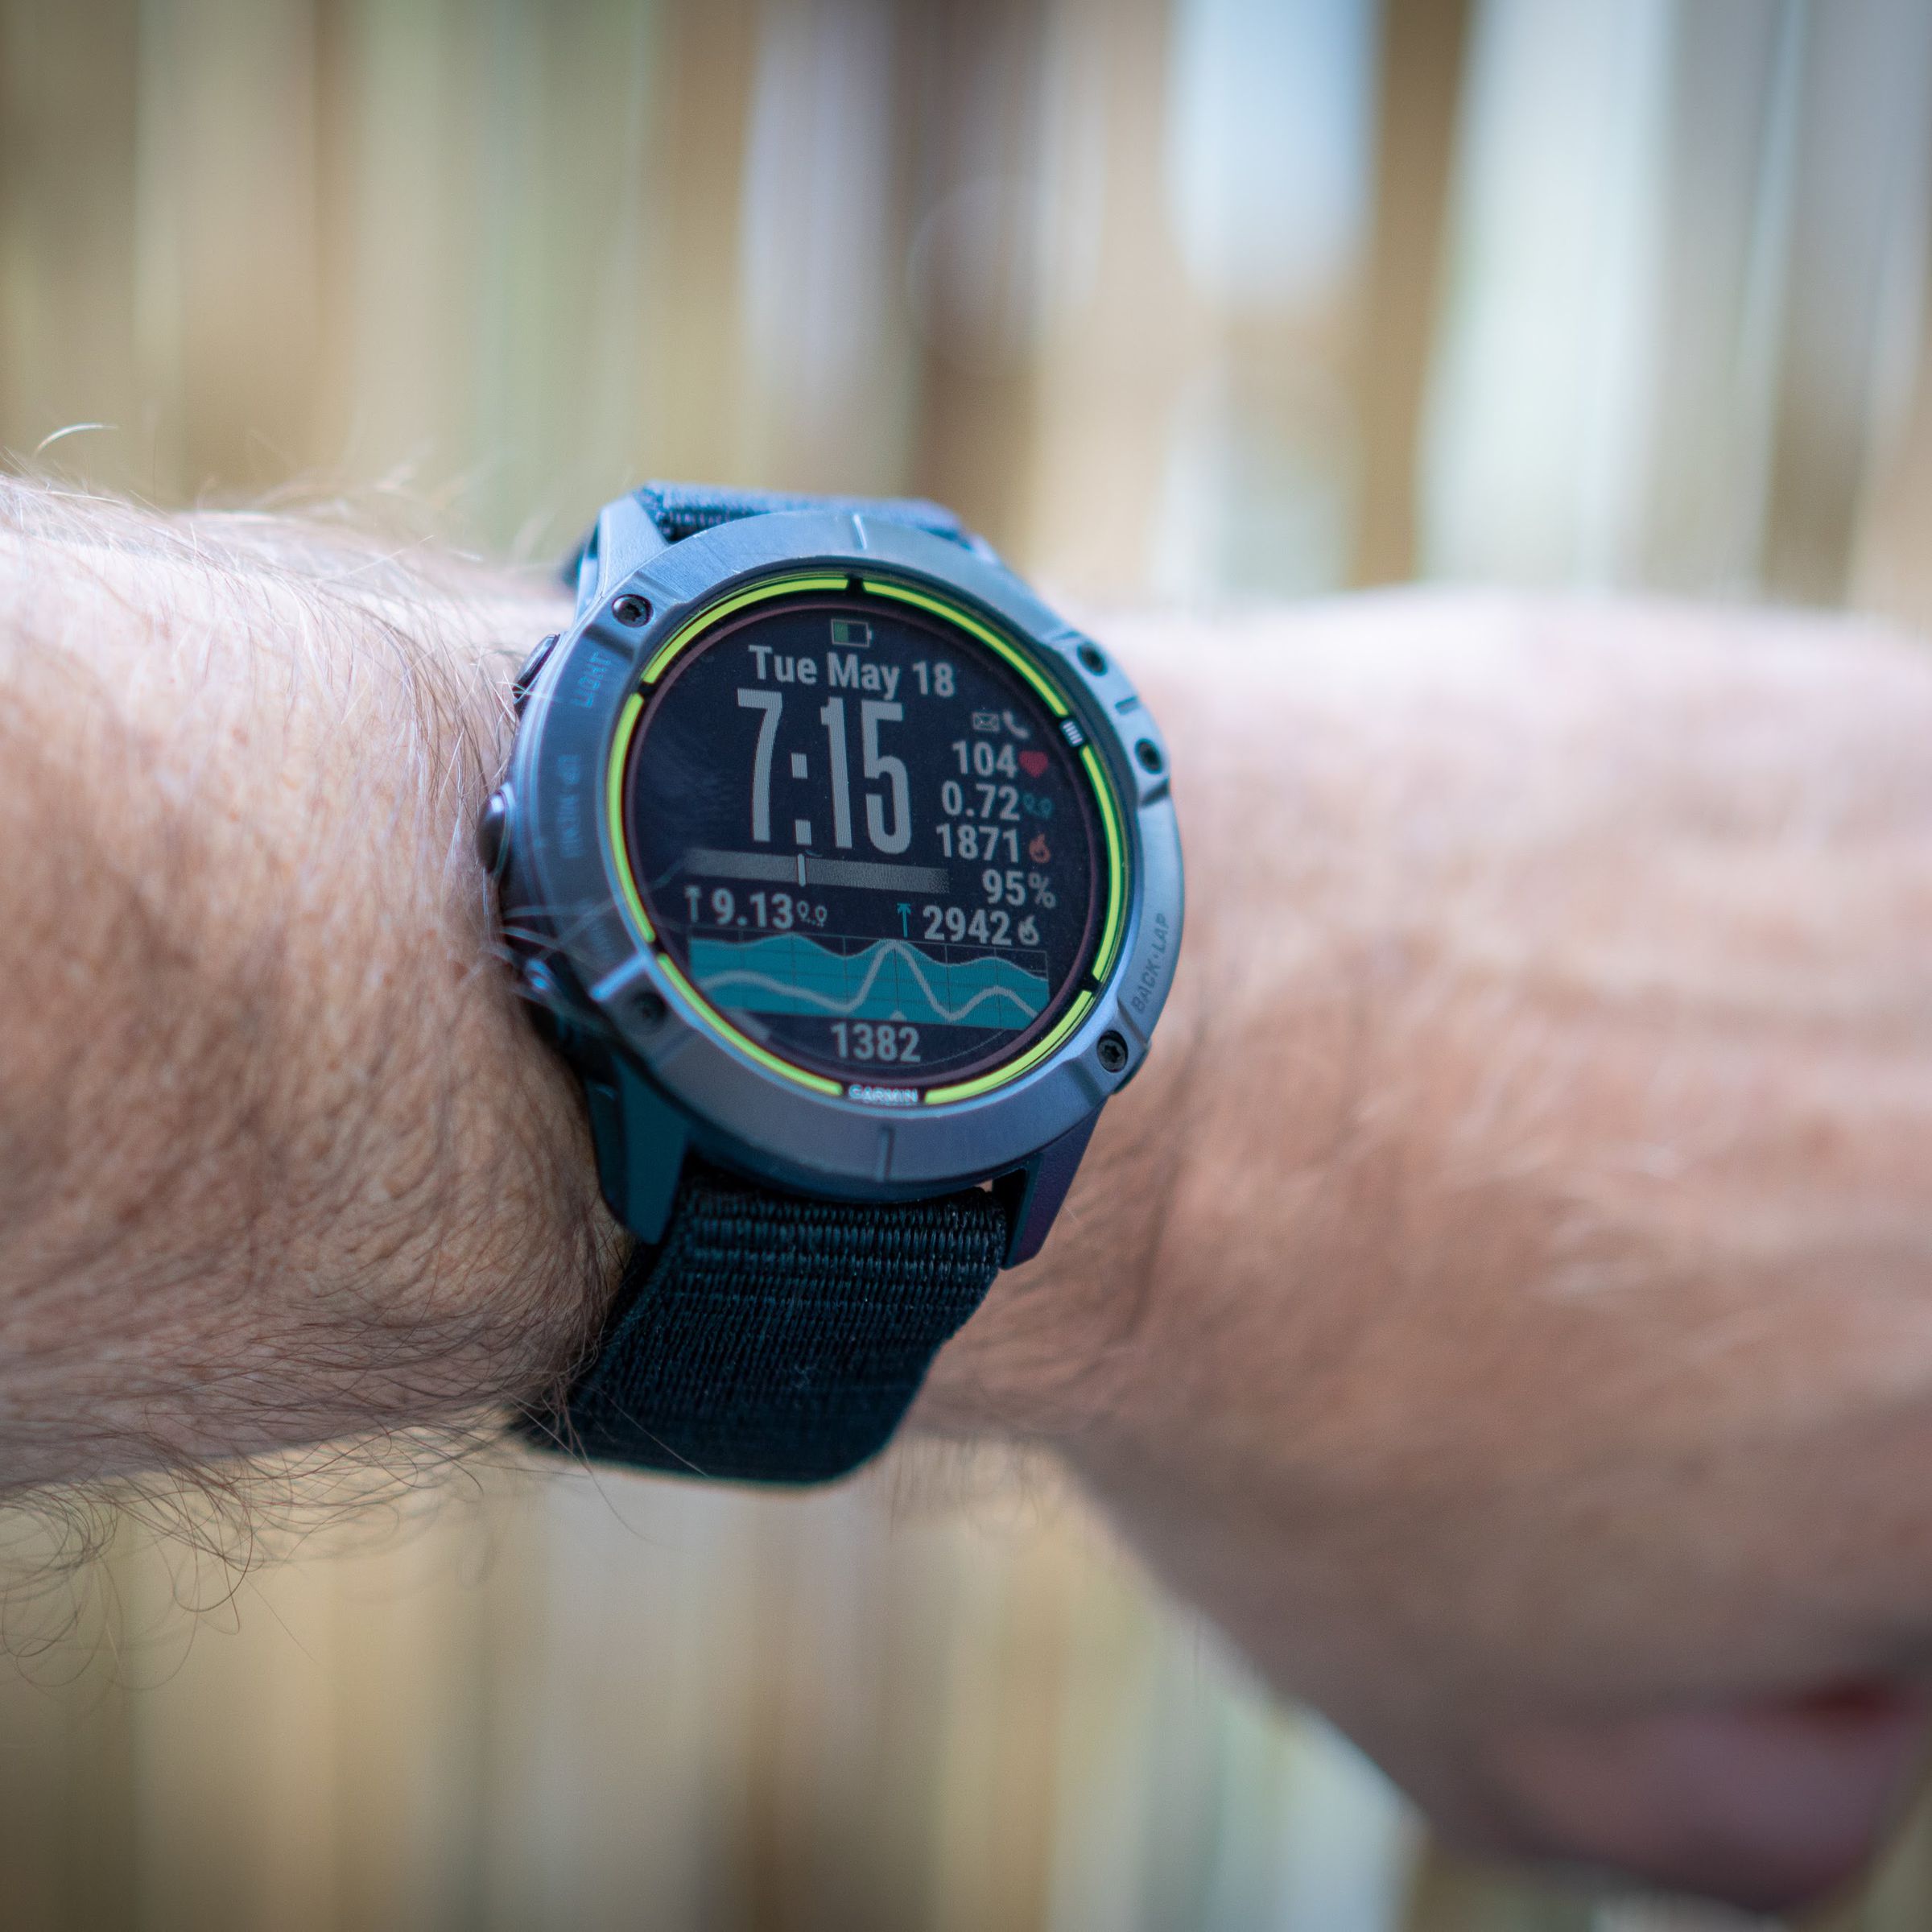 The Garmin Enduro is a big, long-lasting fitness watch